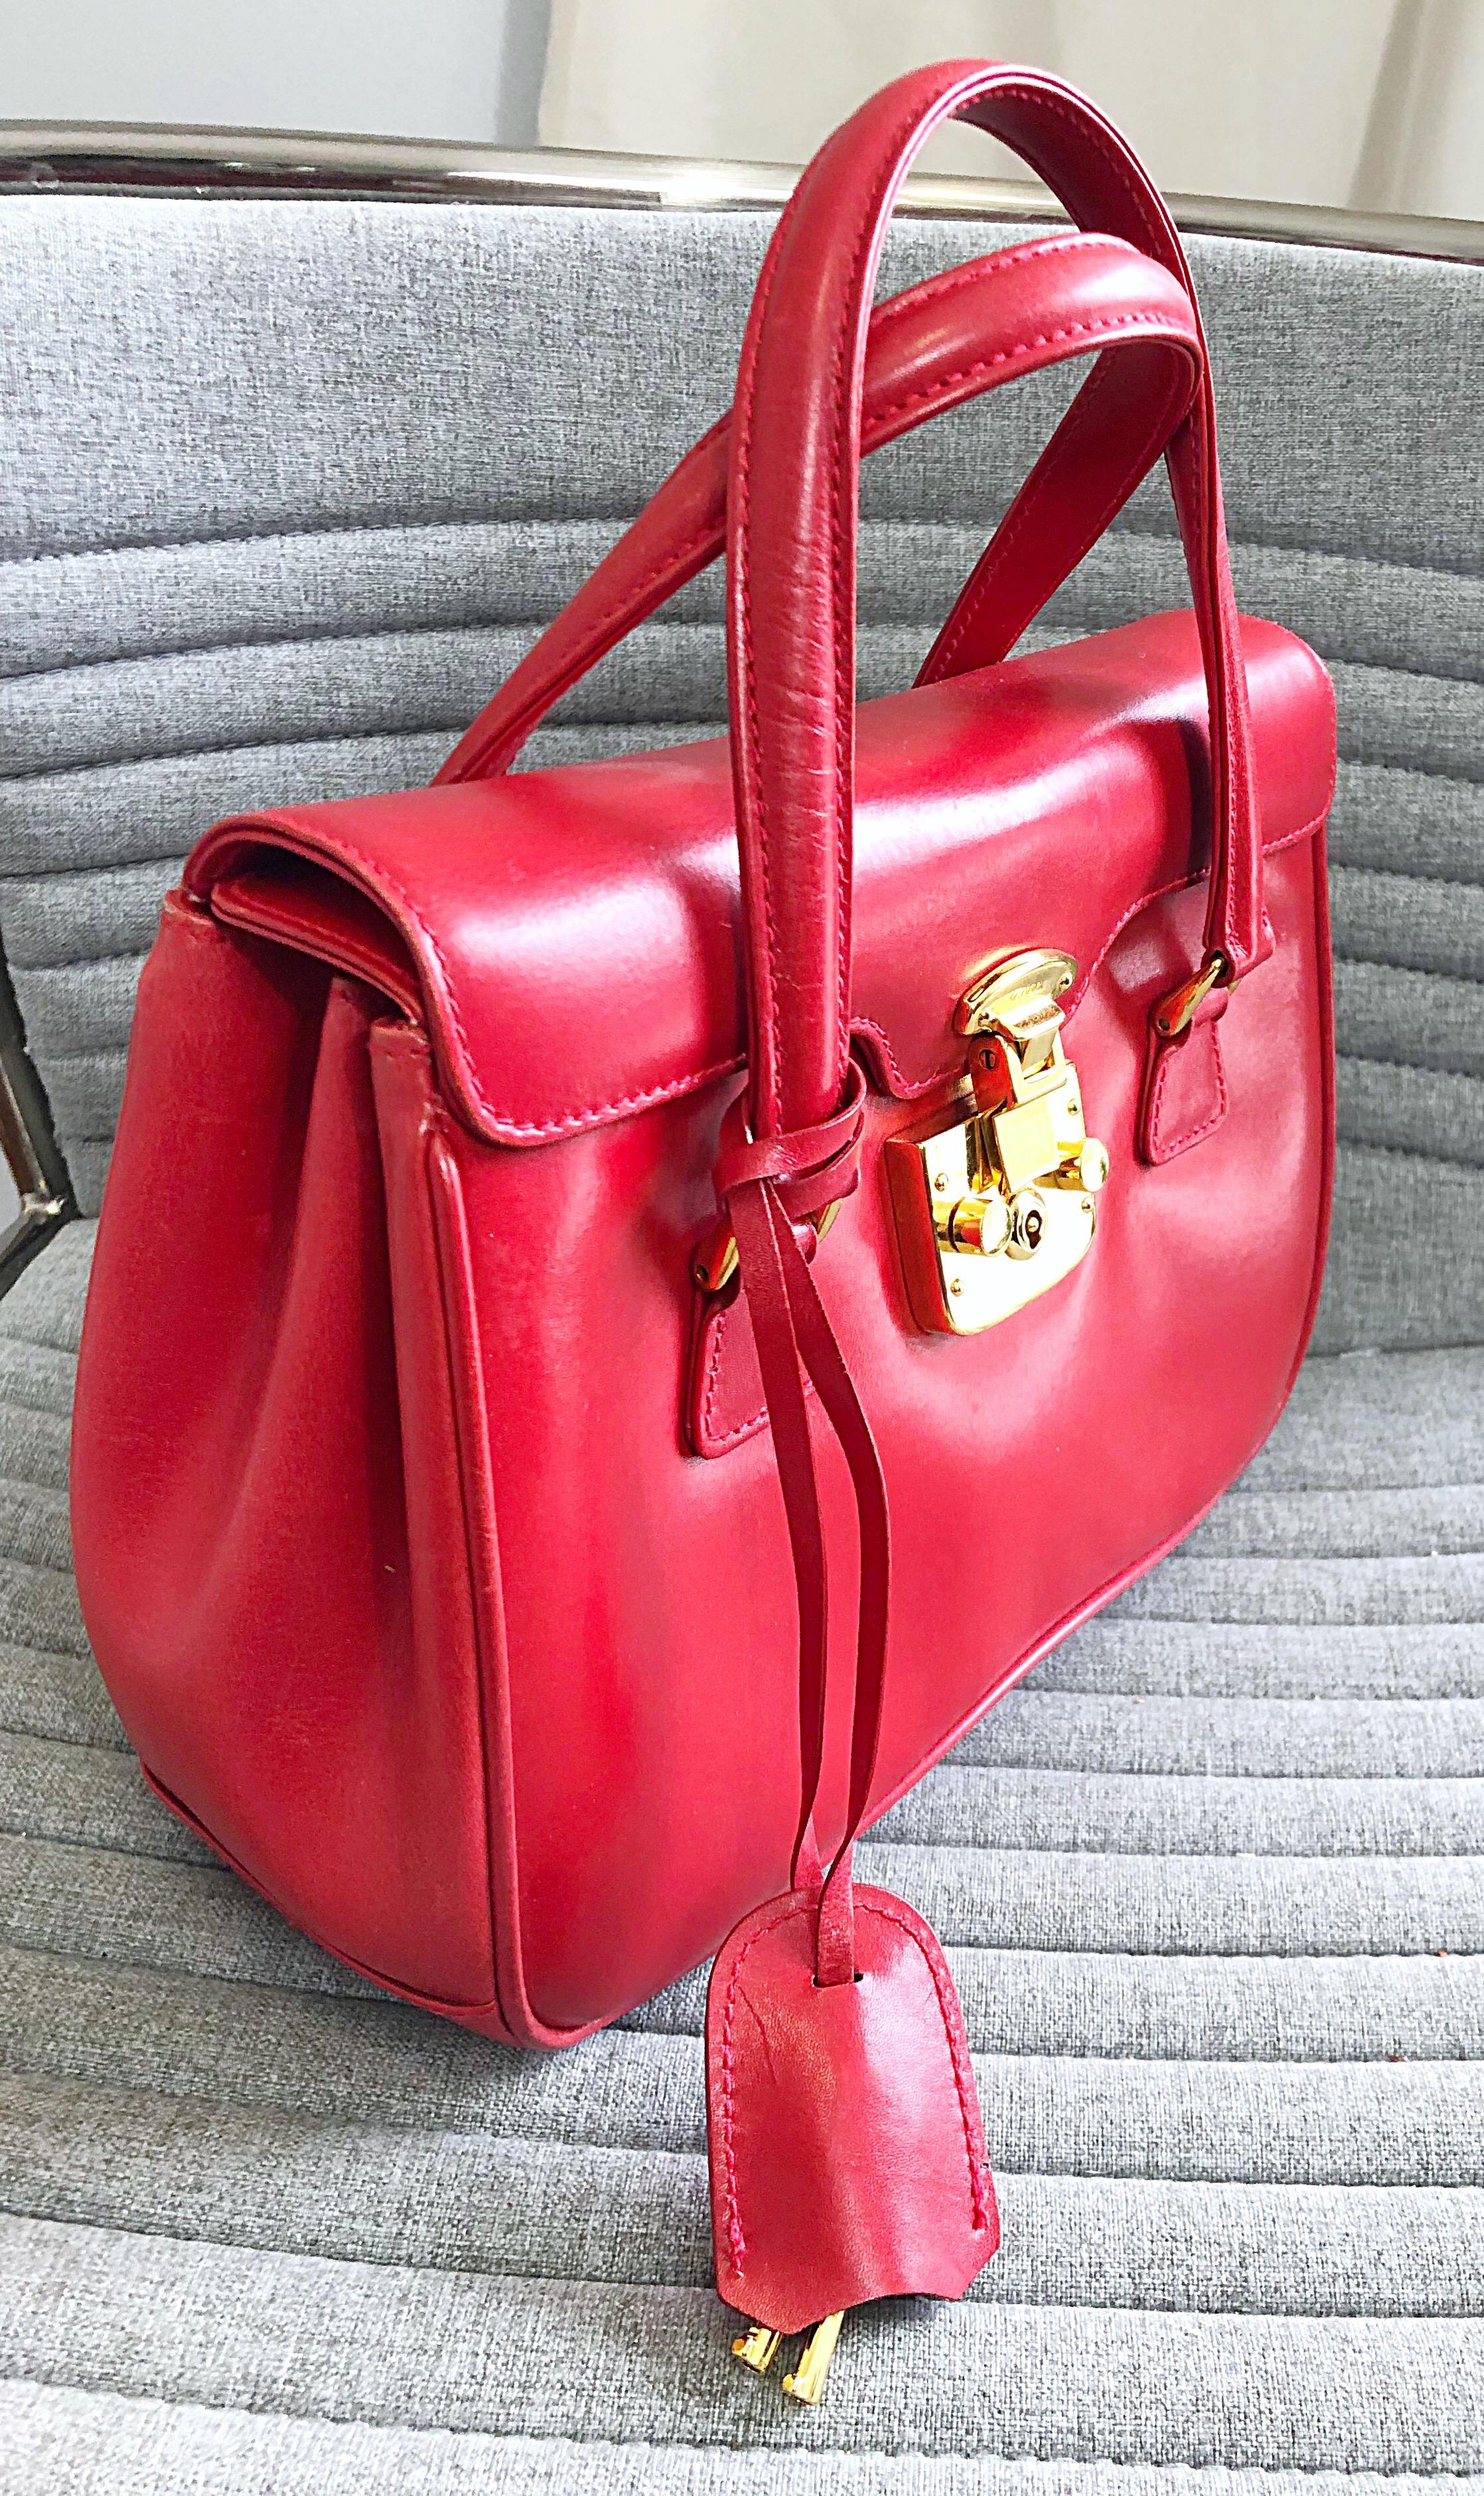 Gucci 1990s Lipstick Red Leather Vintage 90s Purse Handbag Satchel Bag 1